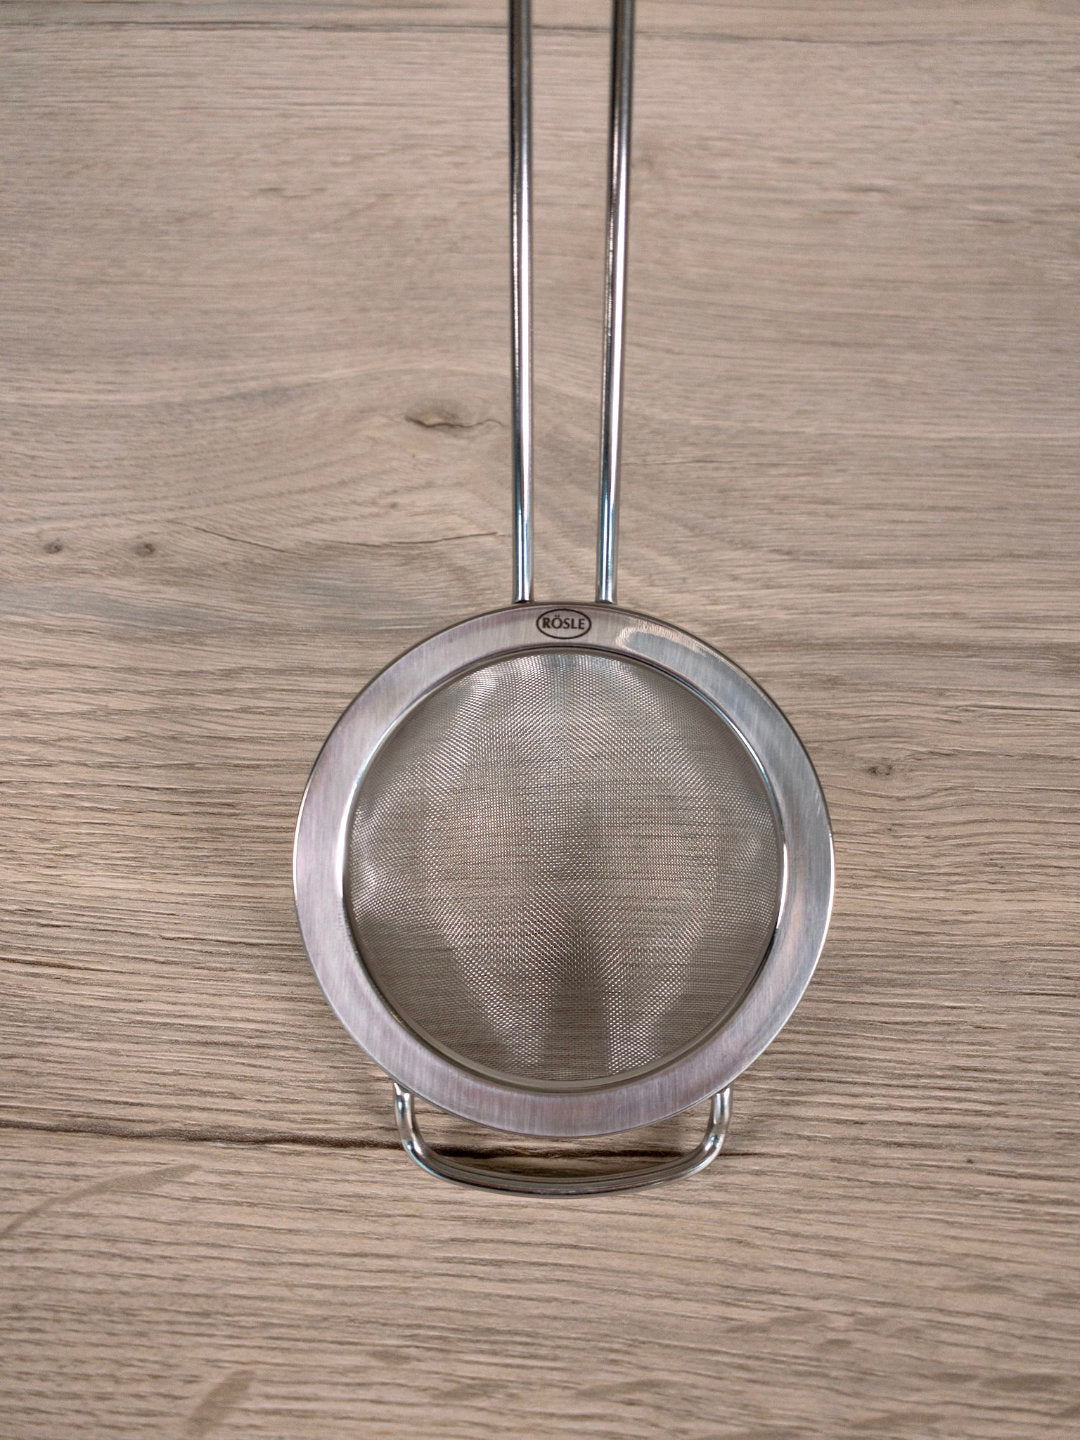 Teesieb feinmaschig - 8 cm - Silber - Küchenhelfer - Rösle